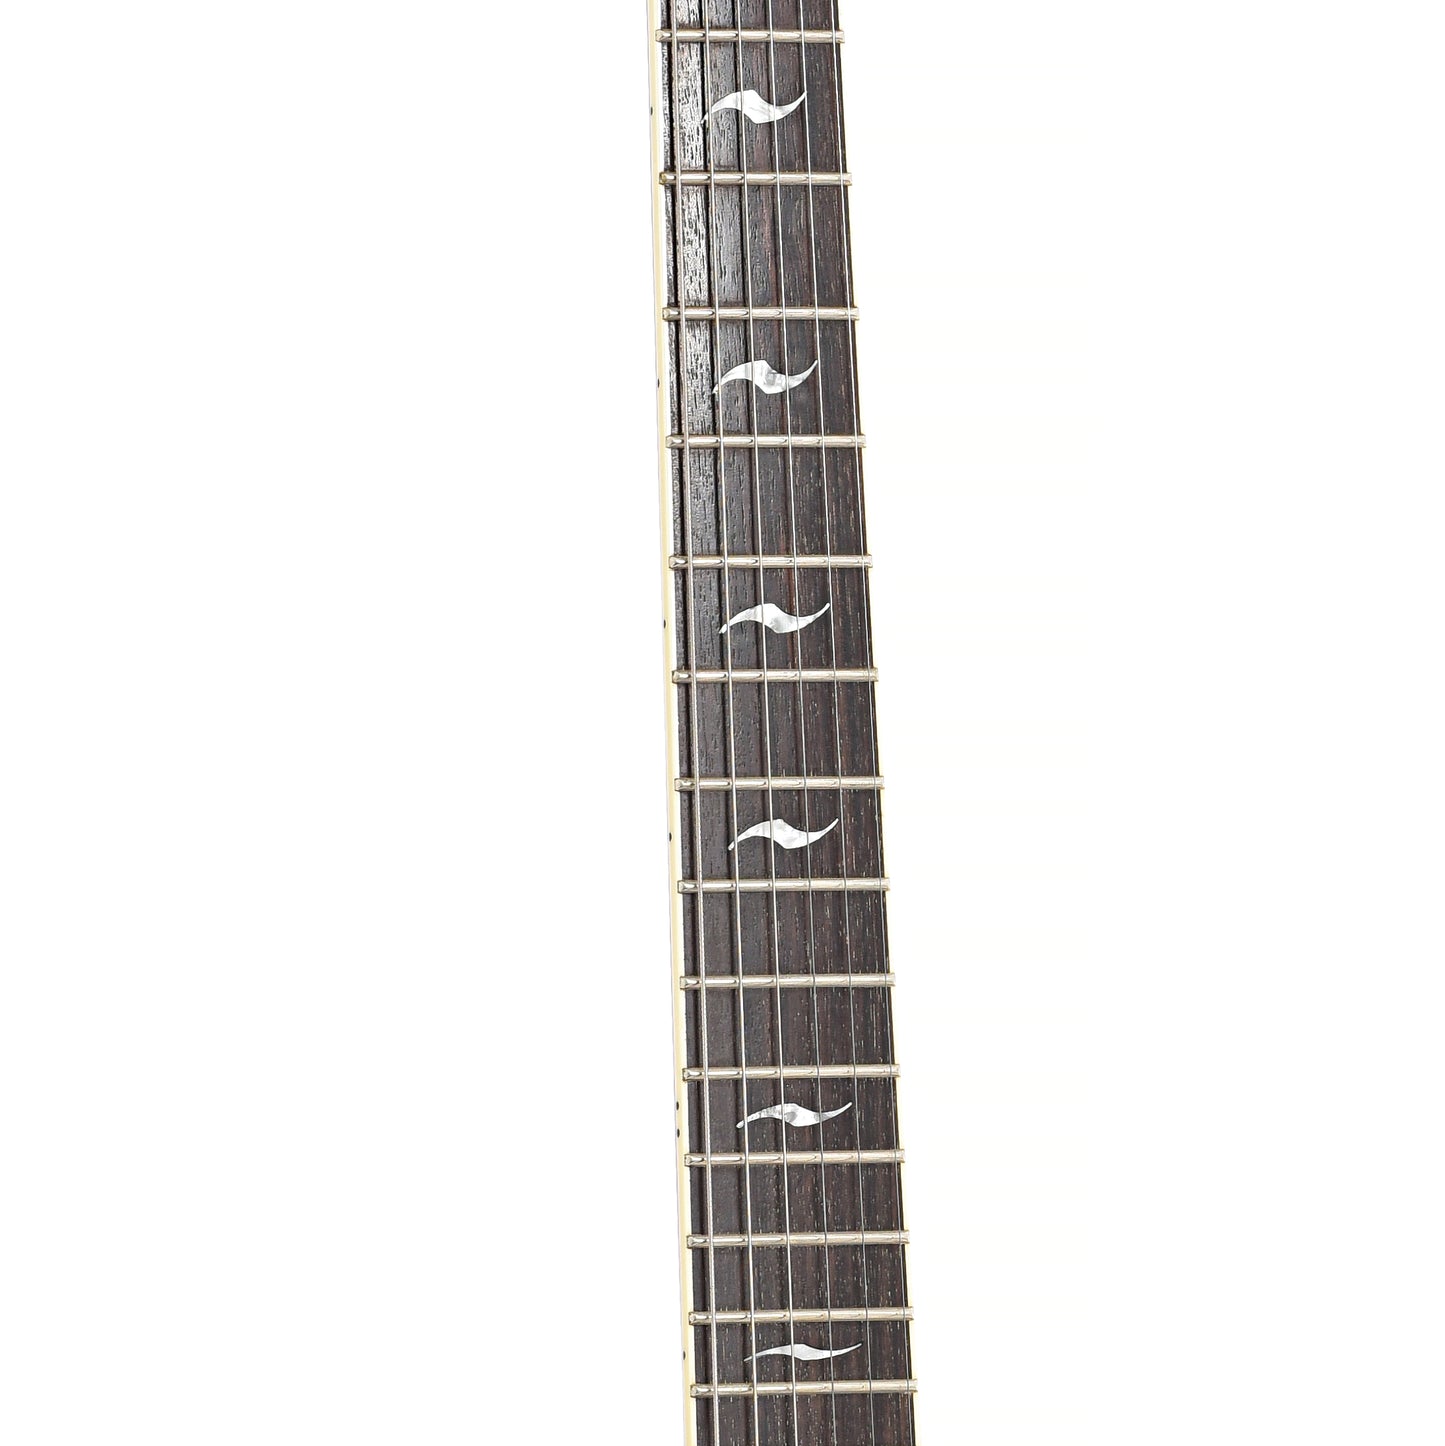 Vox SDC-55 Electric Guitar (2010)